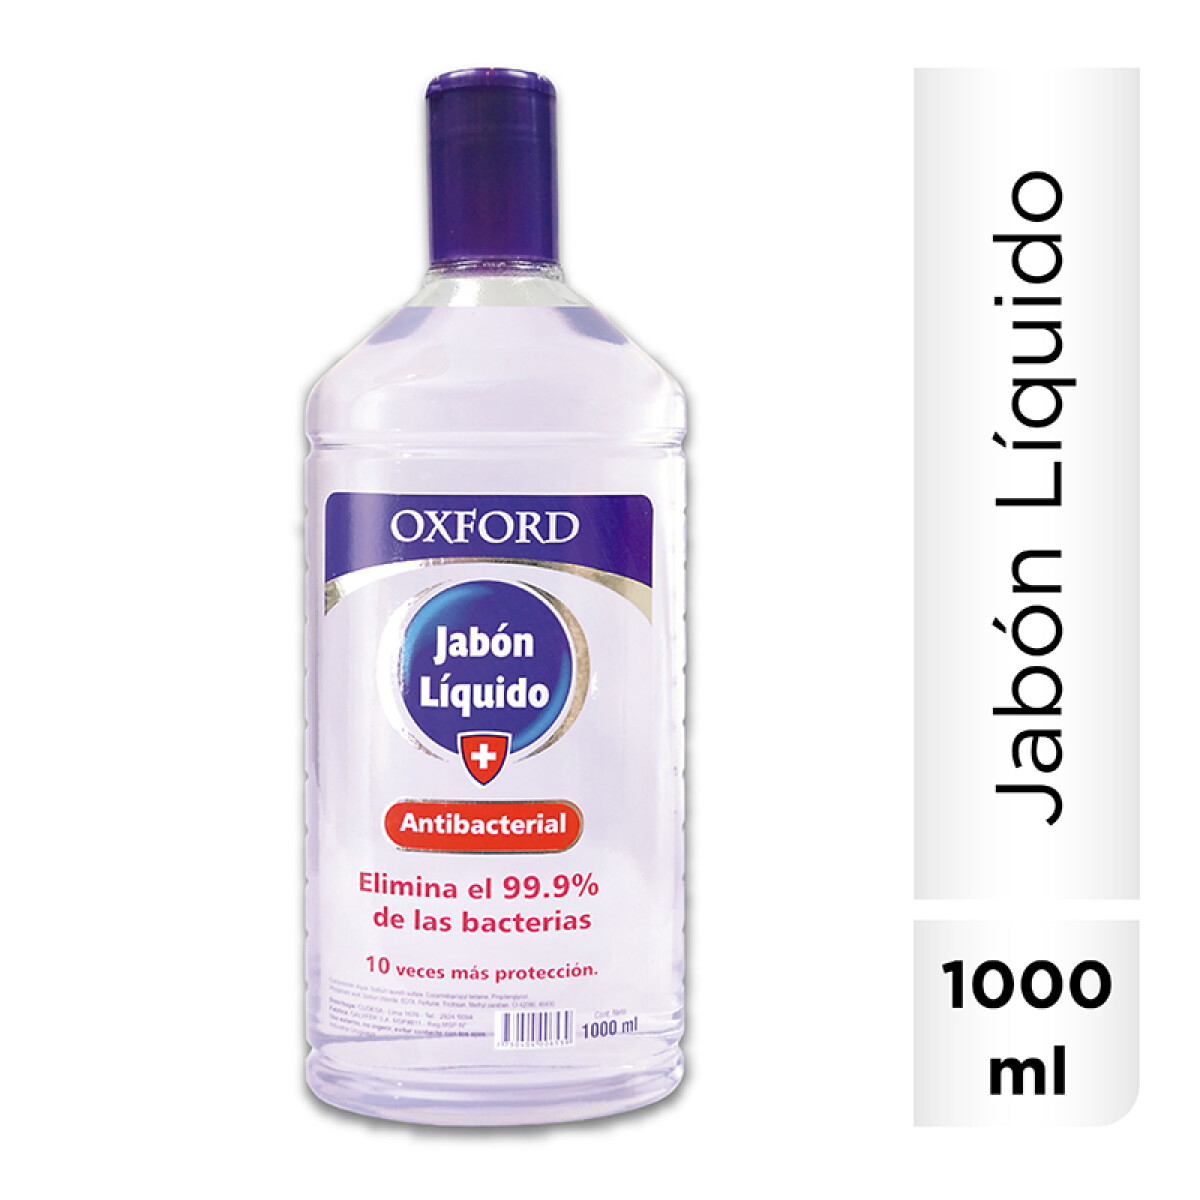 Oxford Antibacterial jabón líquido 1 Litro 